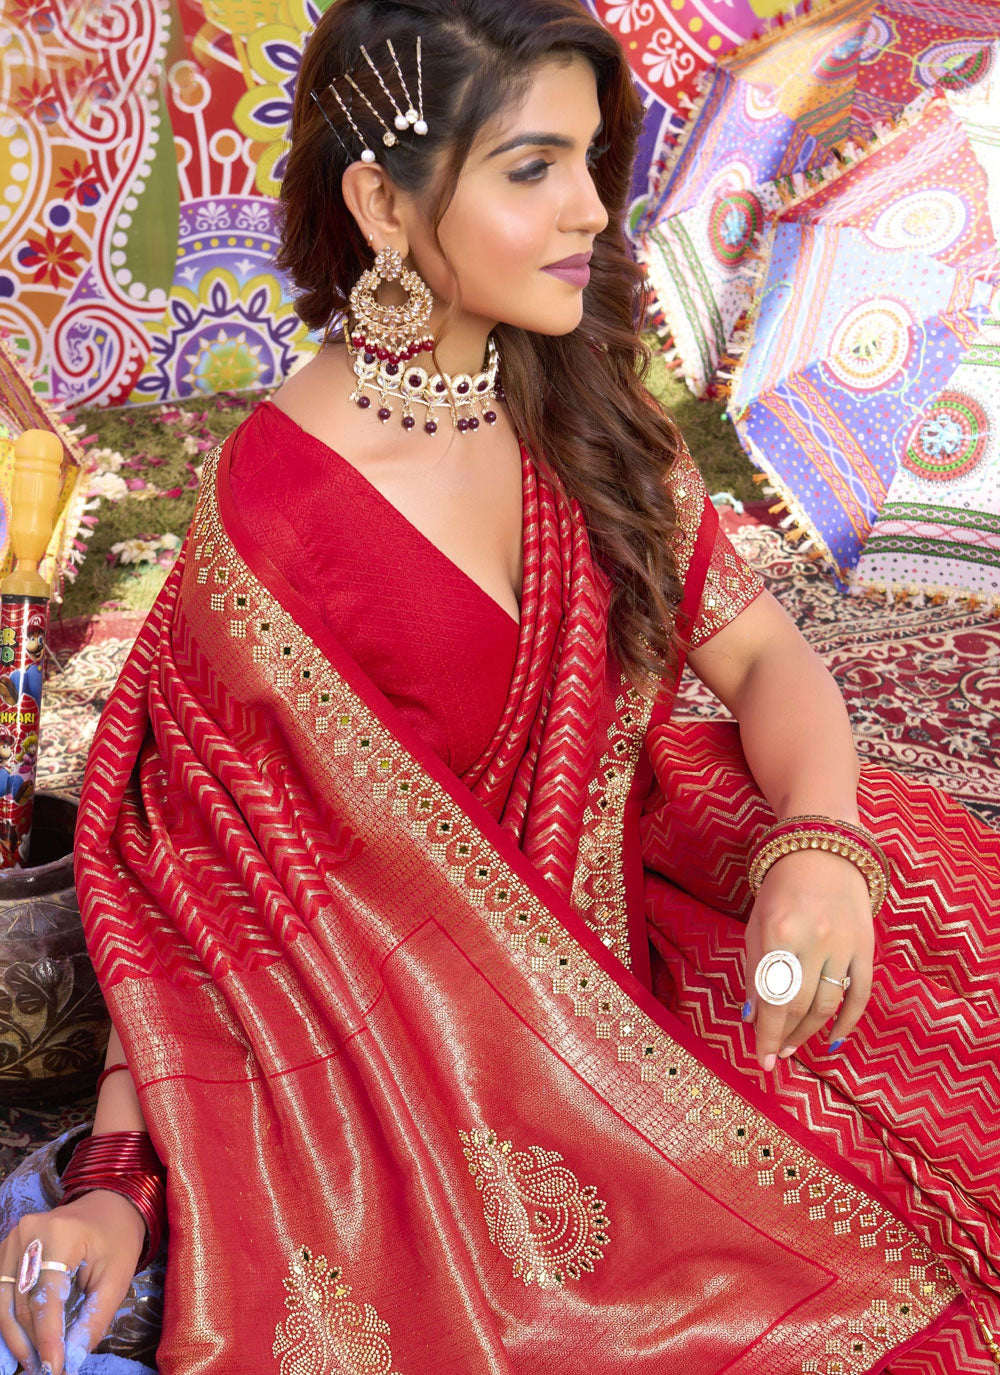 Brocade Contemporary Sari In Red